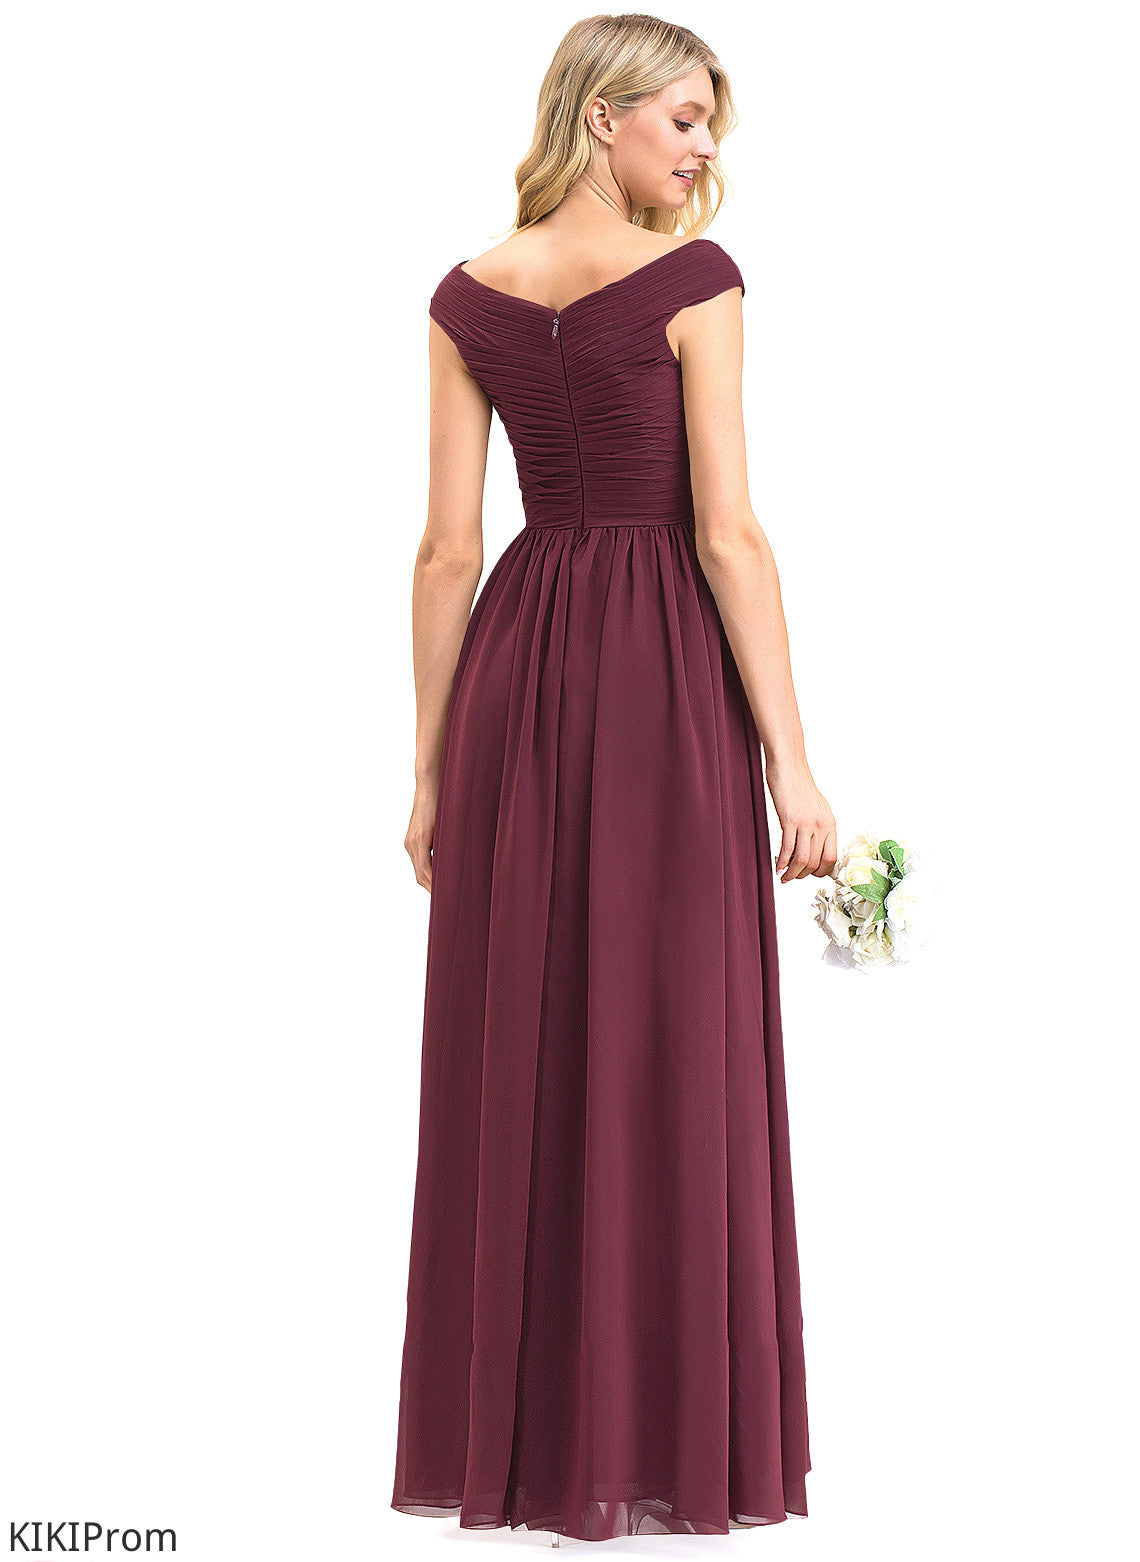 A-Line Silhouette Pockets Embellishment Floor-Length Length Off-the-Shoulder Ruffle SplitFront Fabric Neckline Abbey Bridesmaid Dresses